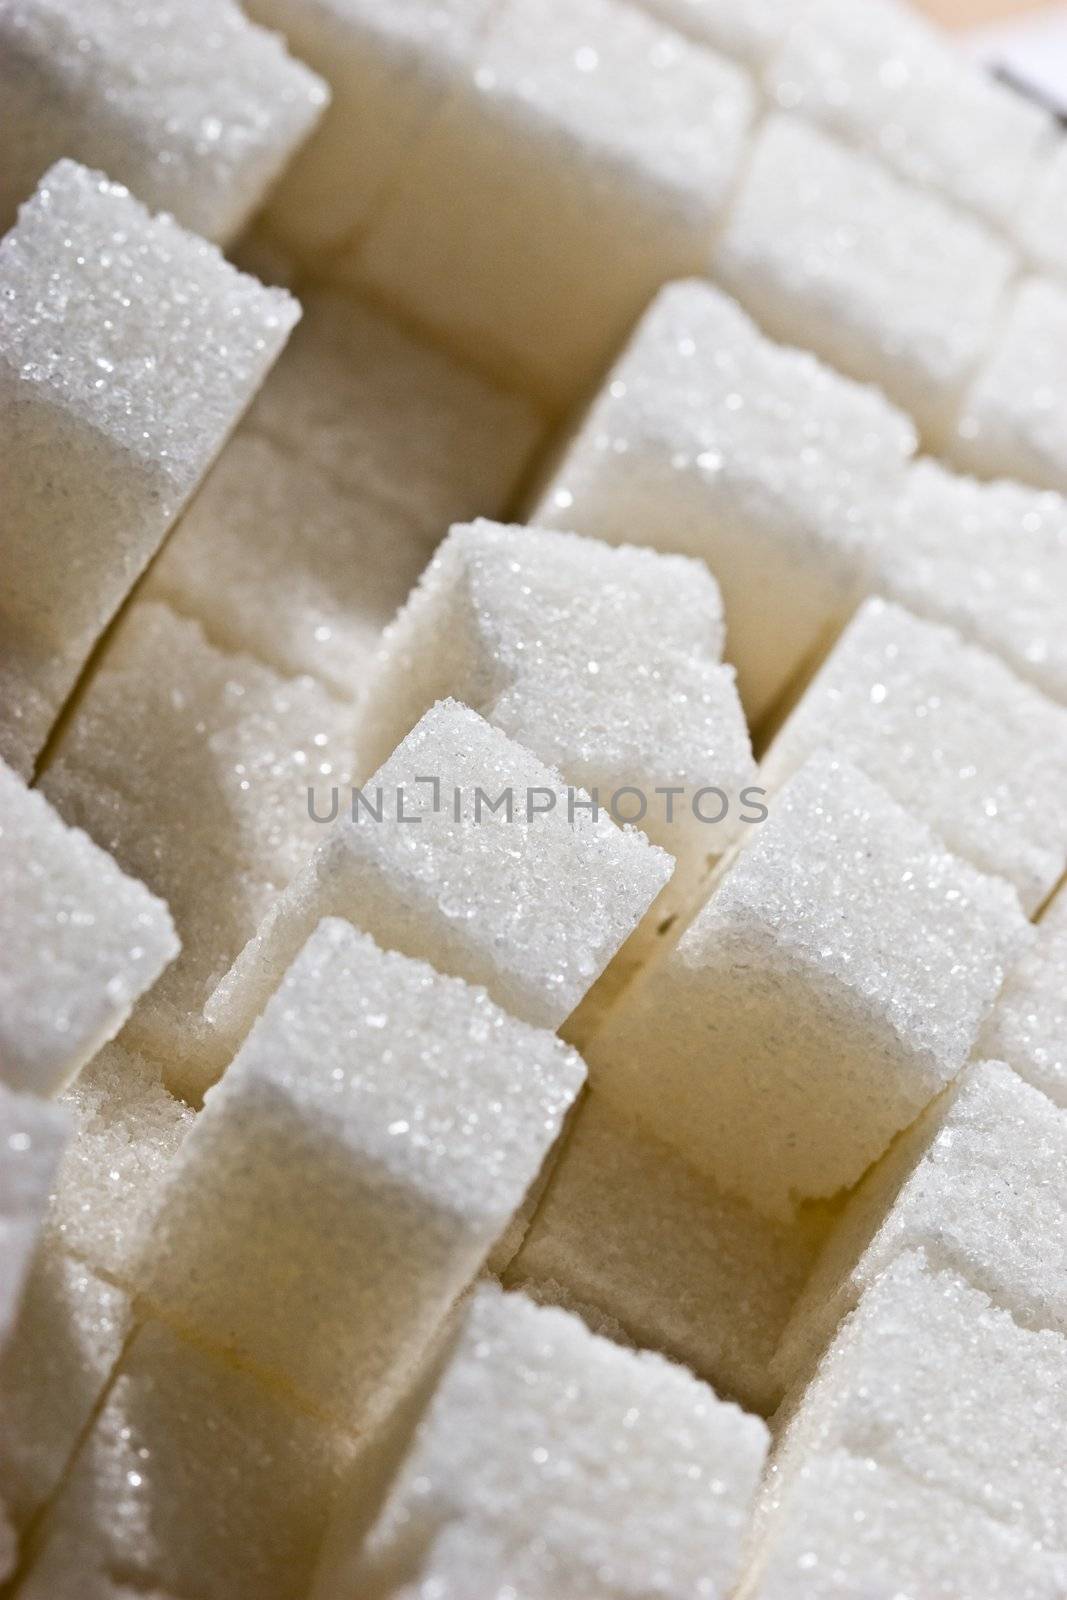 sweet  theme: background of sugar cube